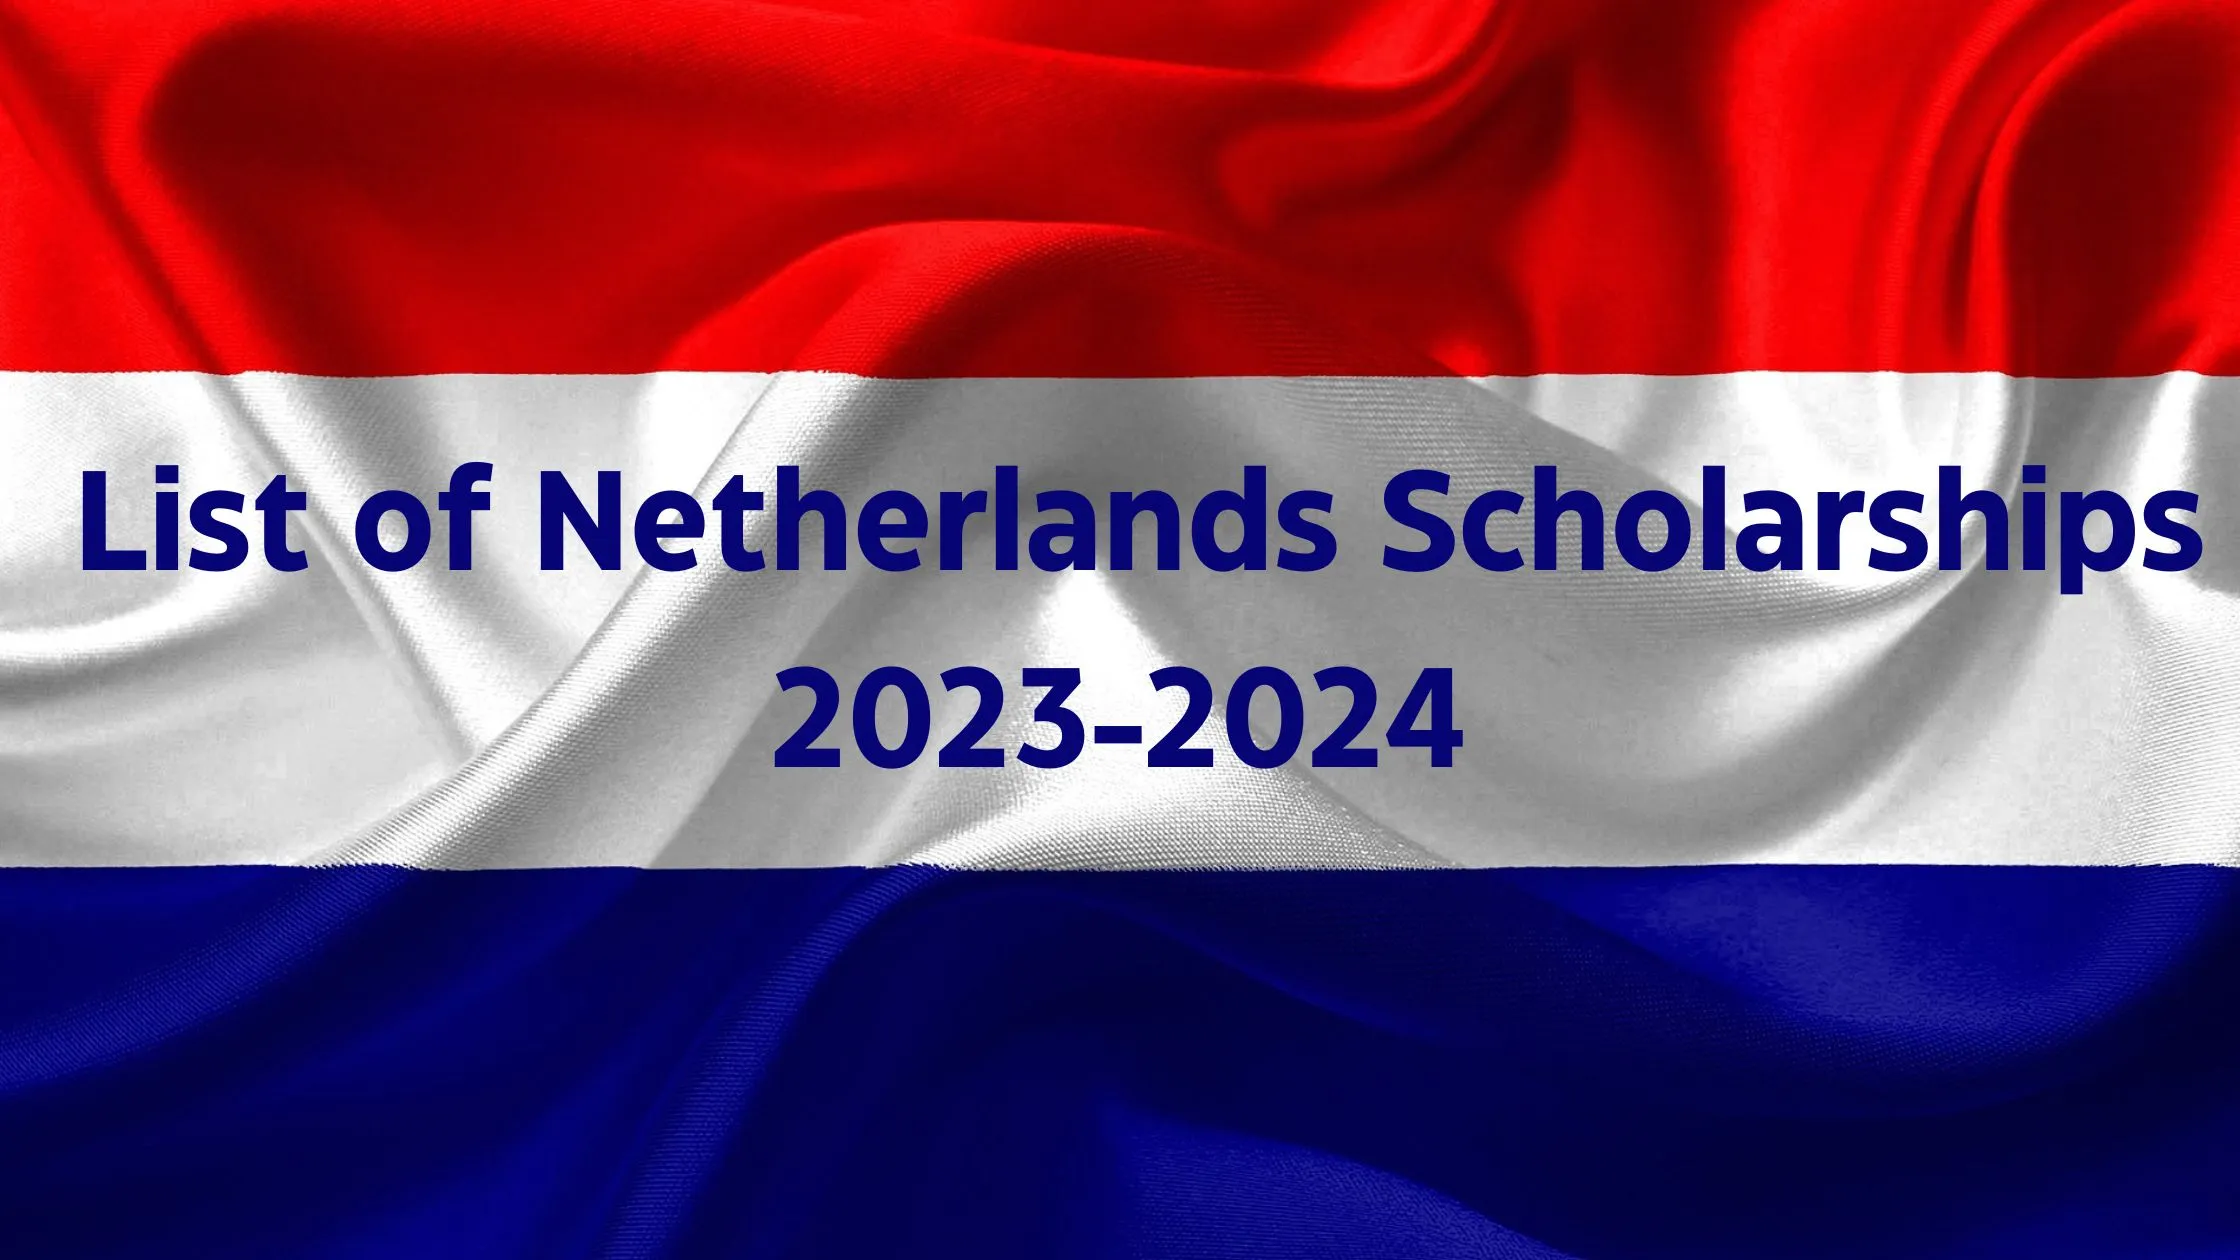 List of Netherlands Scholarships 2023-2024